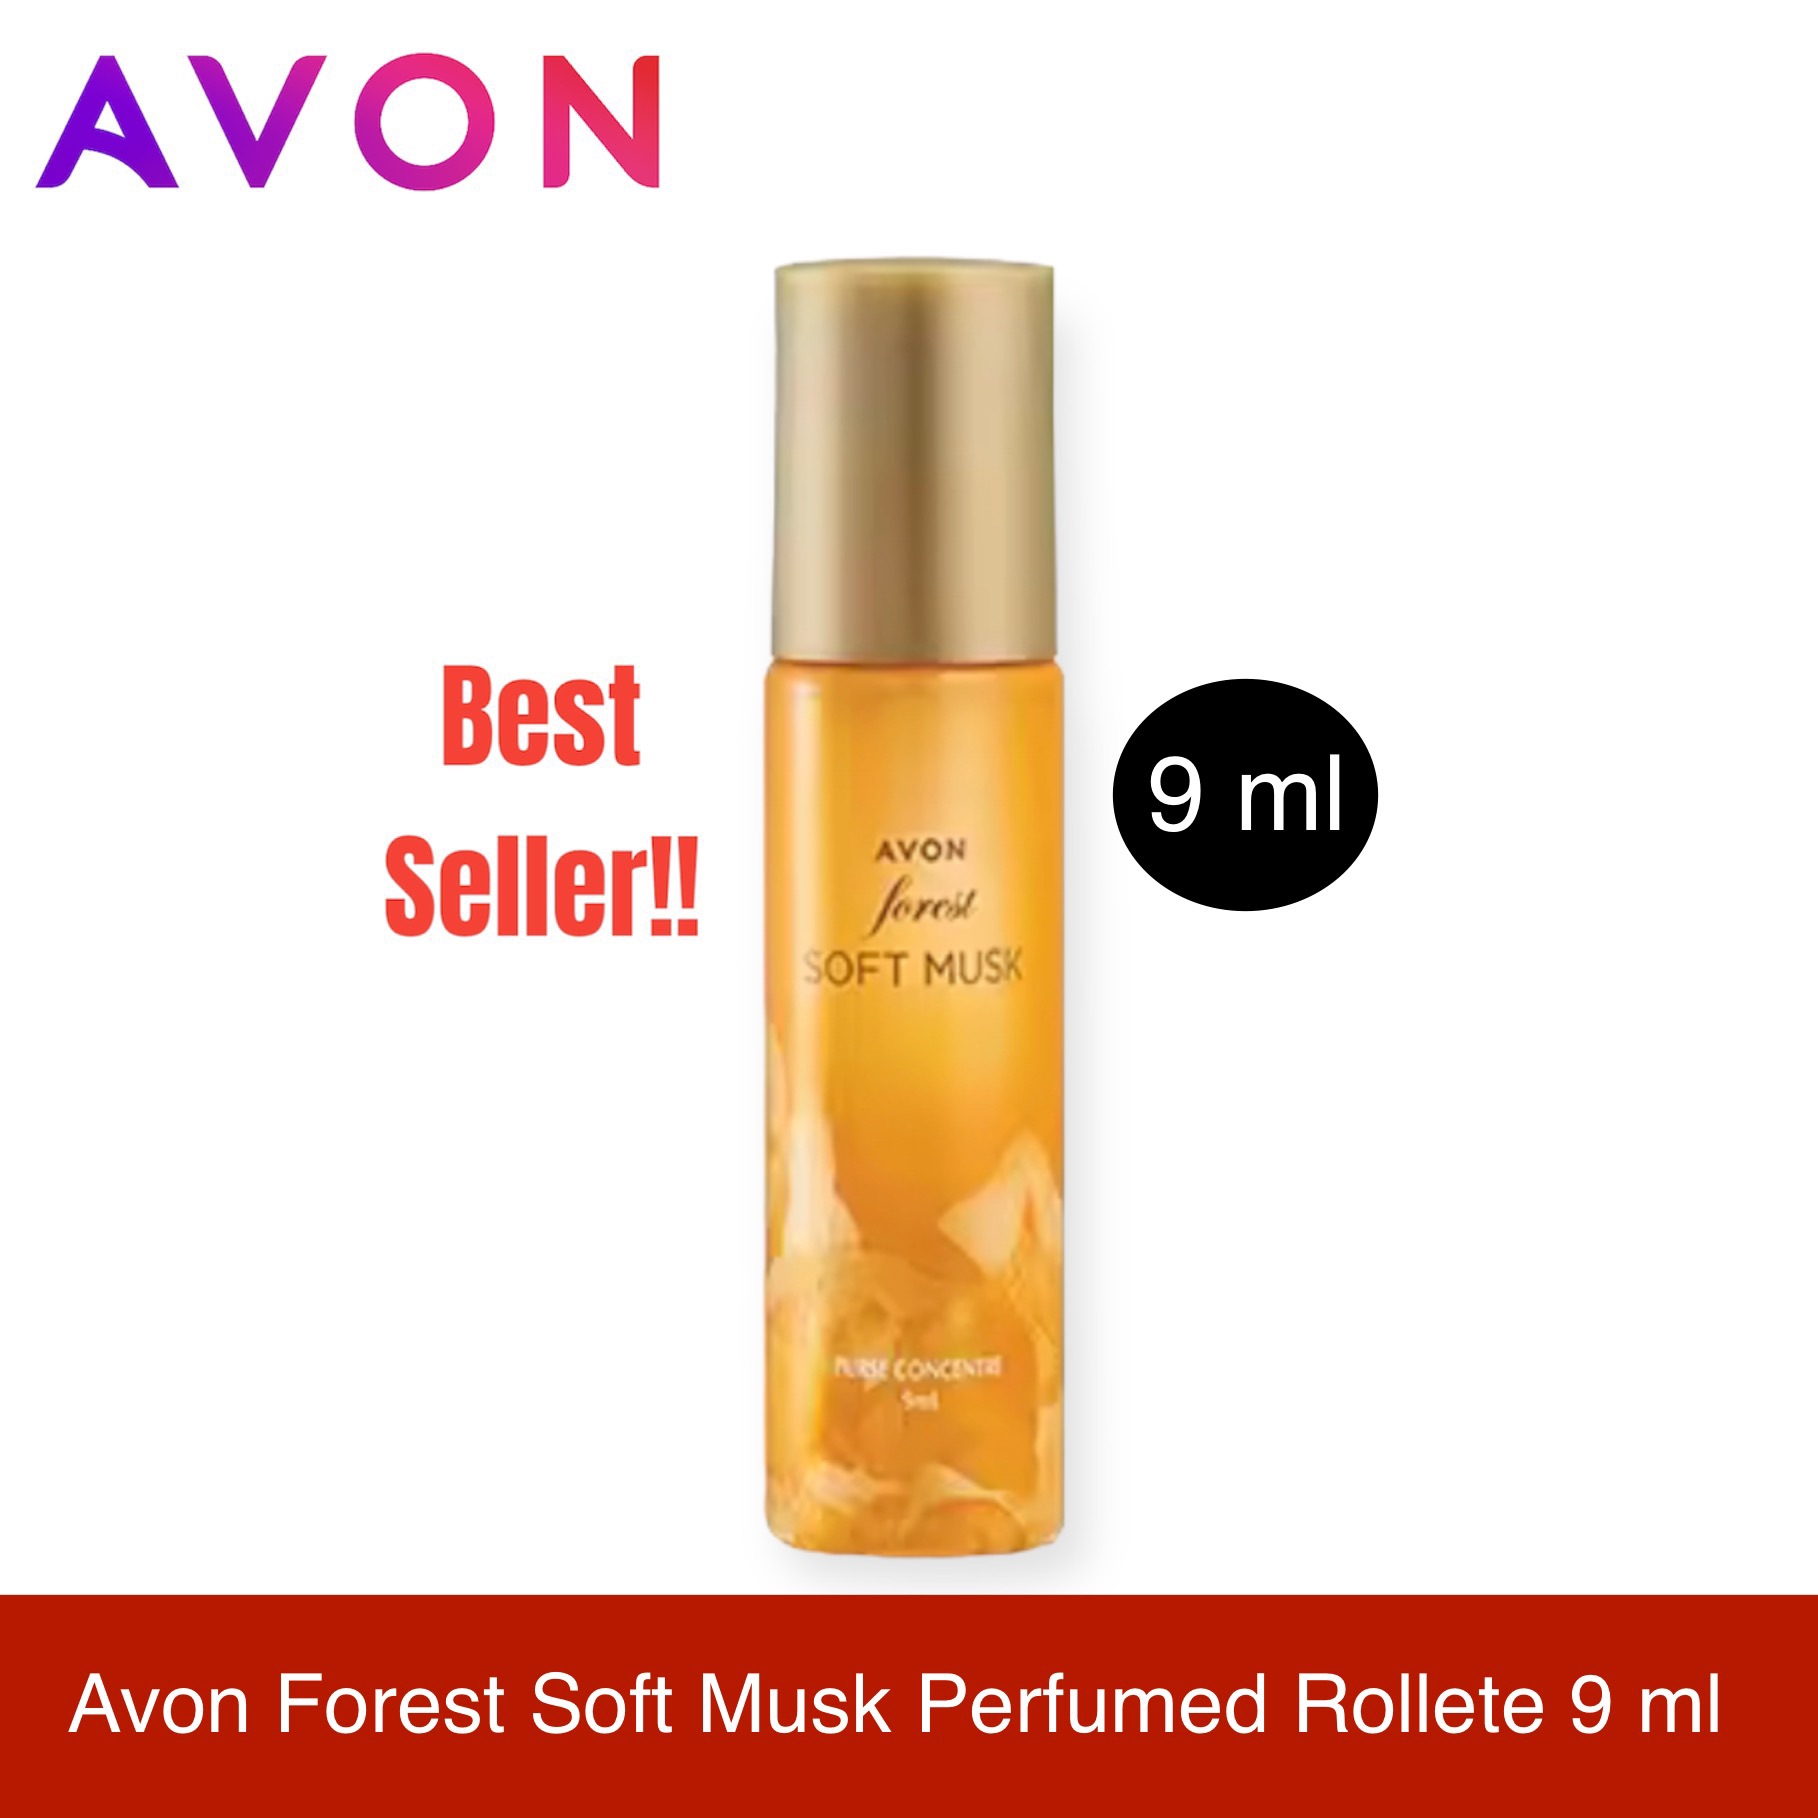 Avon Forest Soft Musk Rollete 9 ml Perfume for Women